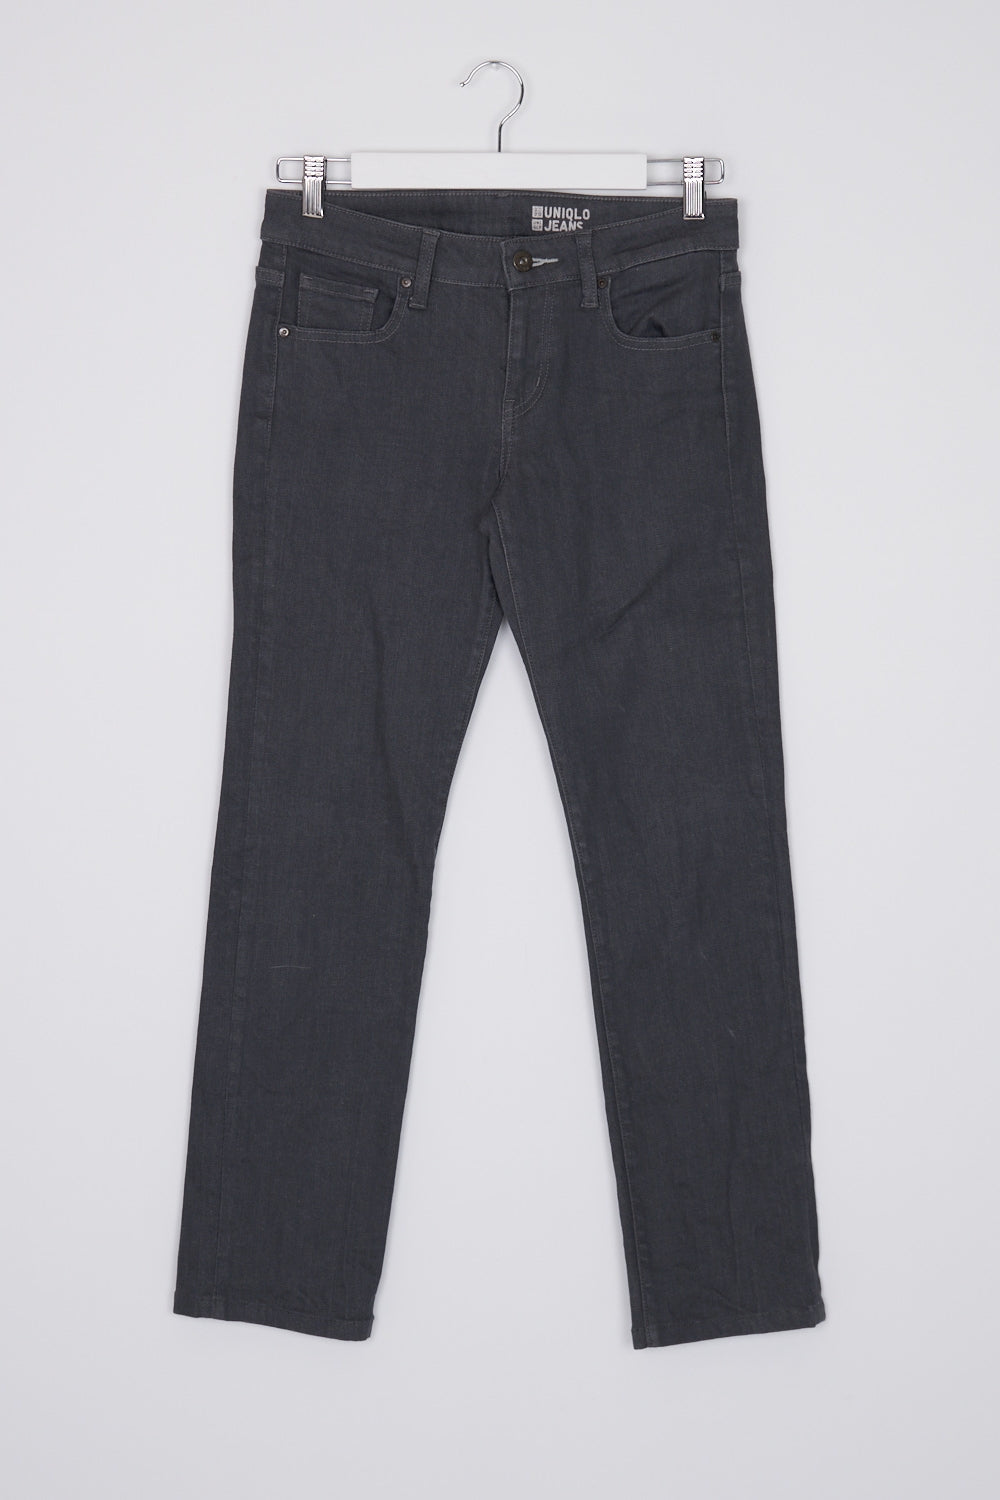 Uniqlo Grey Slim Fit Jeans AU 6 / 24